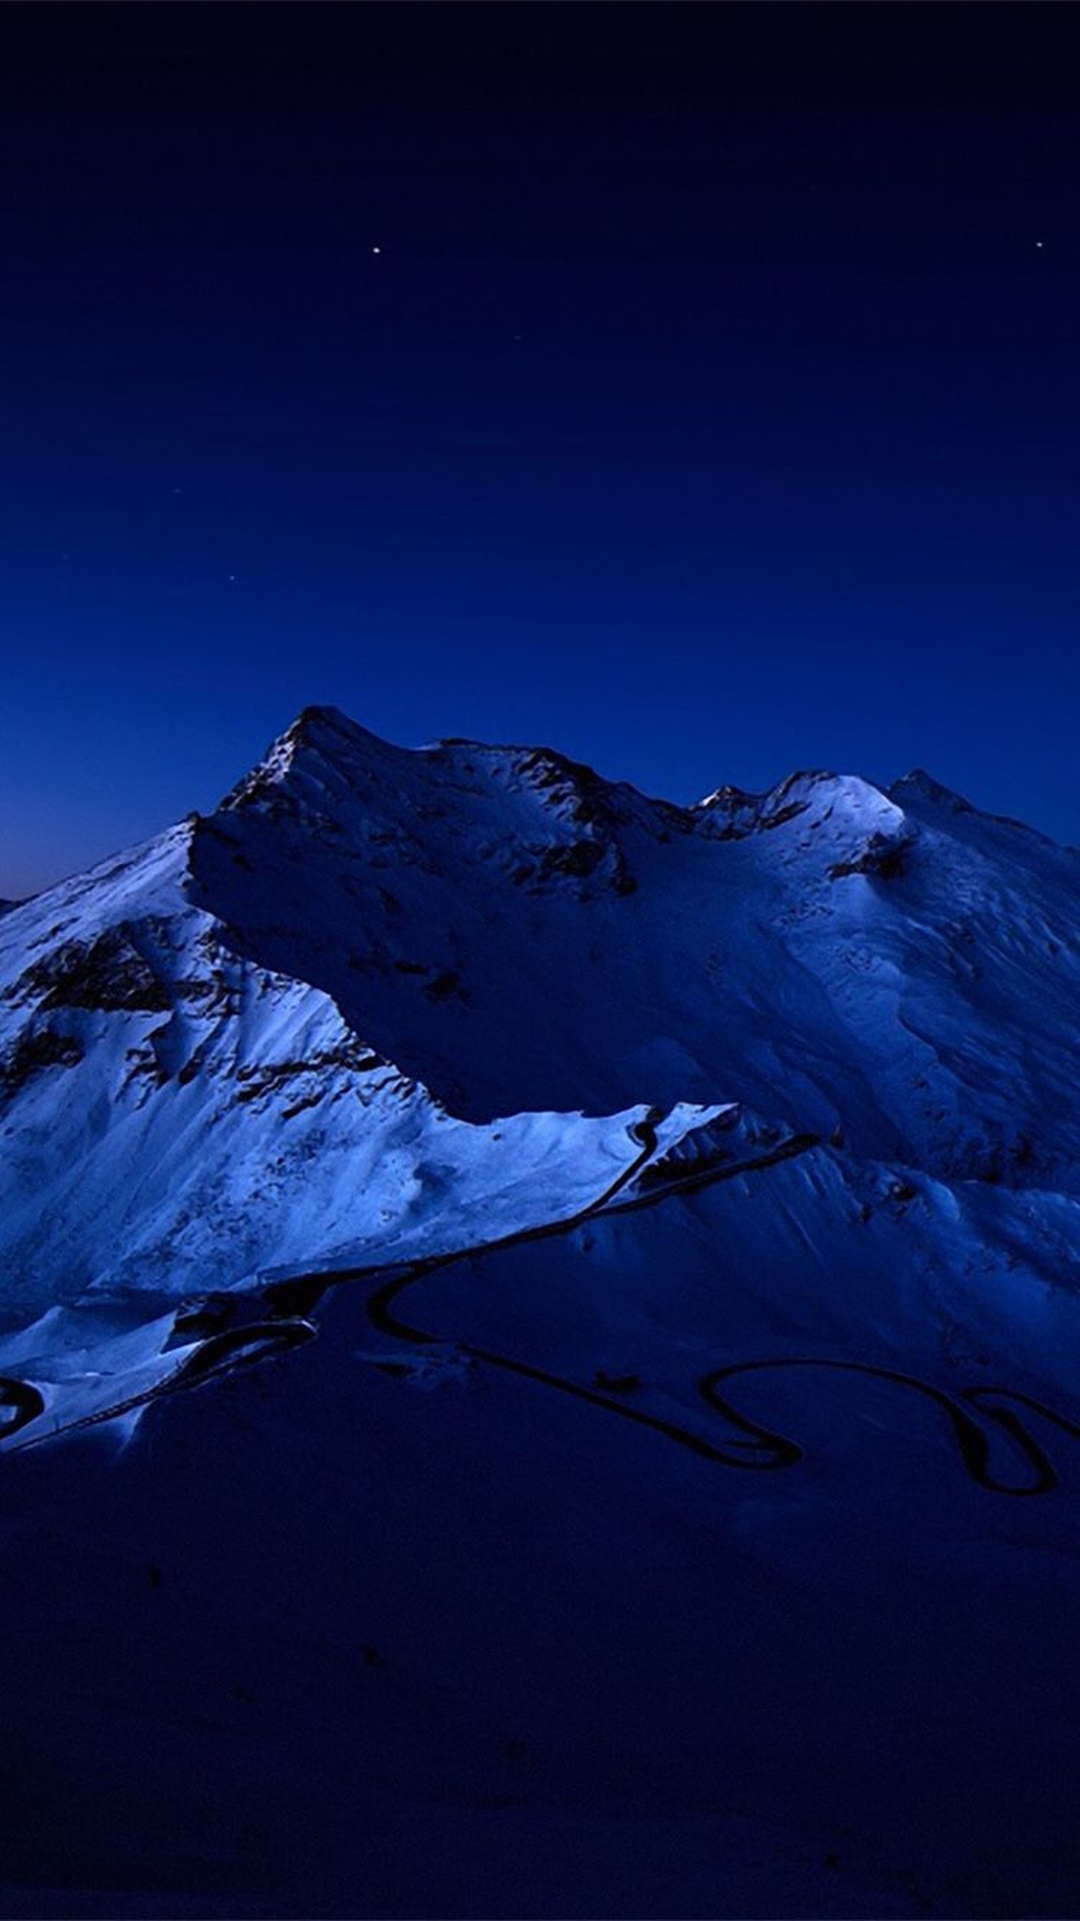 Night-Sky-Over-Snow-Mountain-Peak-iPhone-6-Plus-HD-Wallpaper.